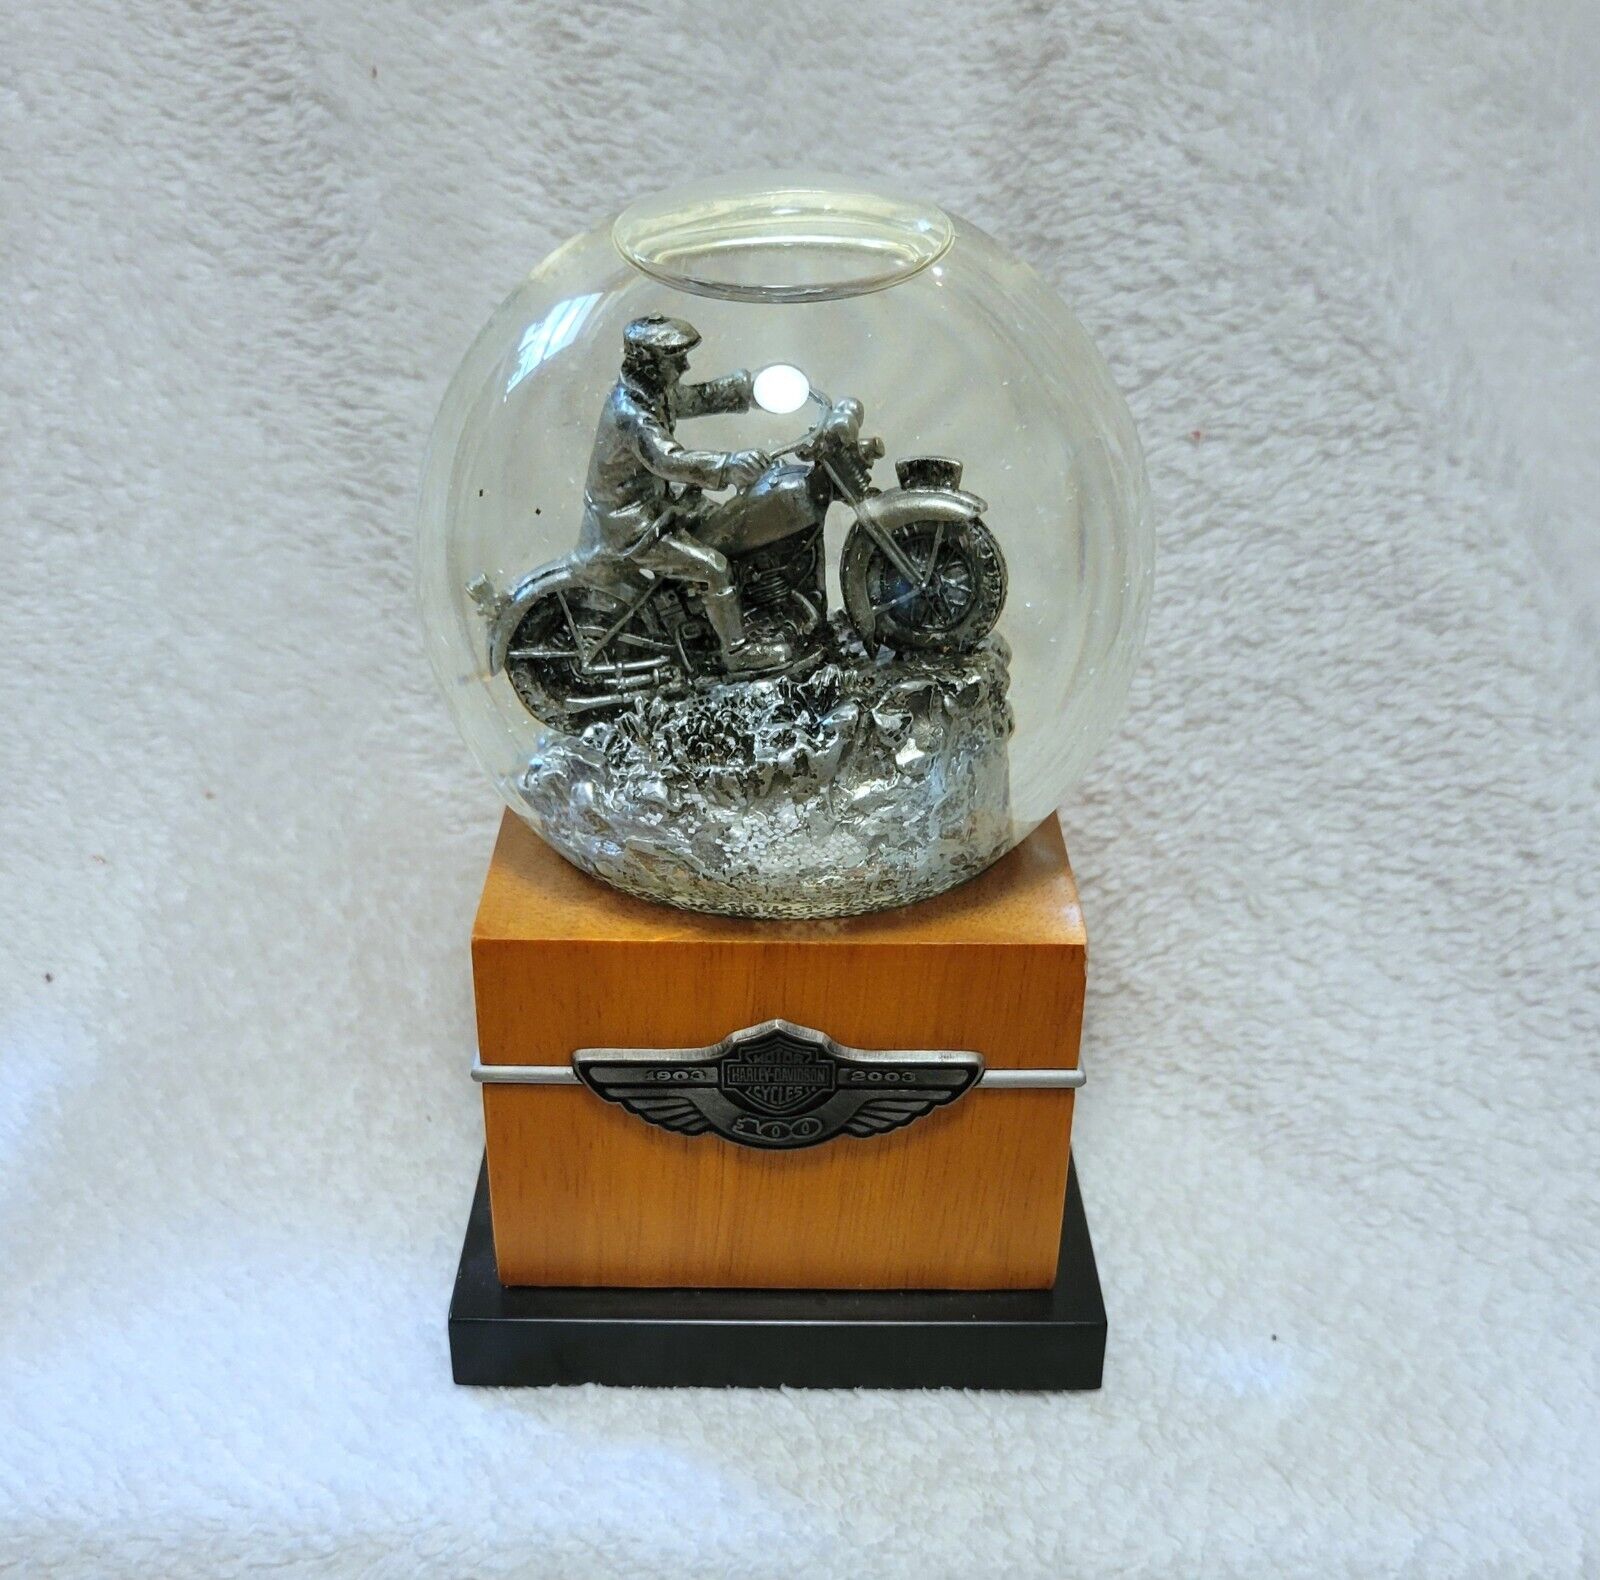 Harley Davidson 2003 100th Anniversary Snow Globe Collectible